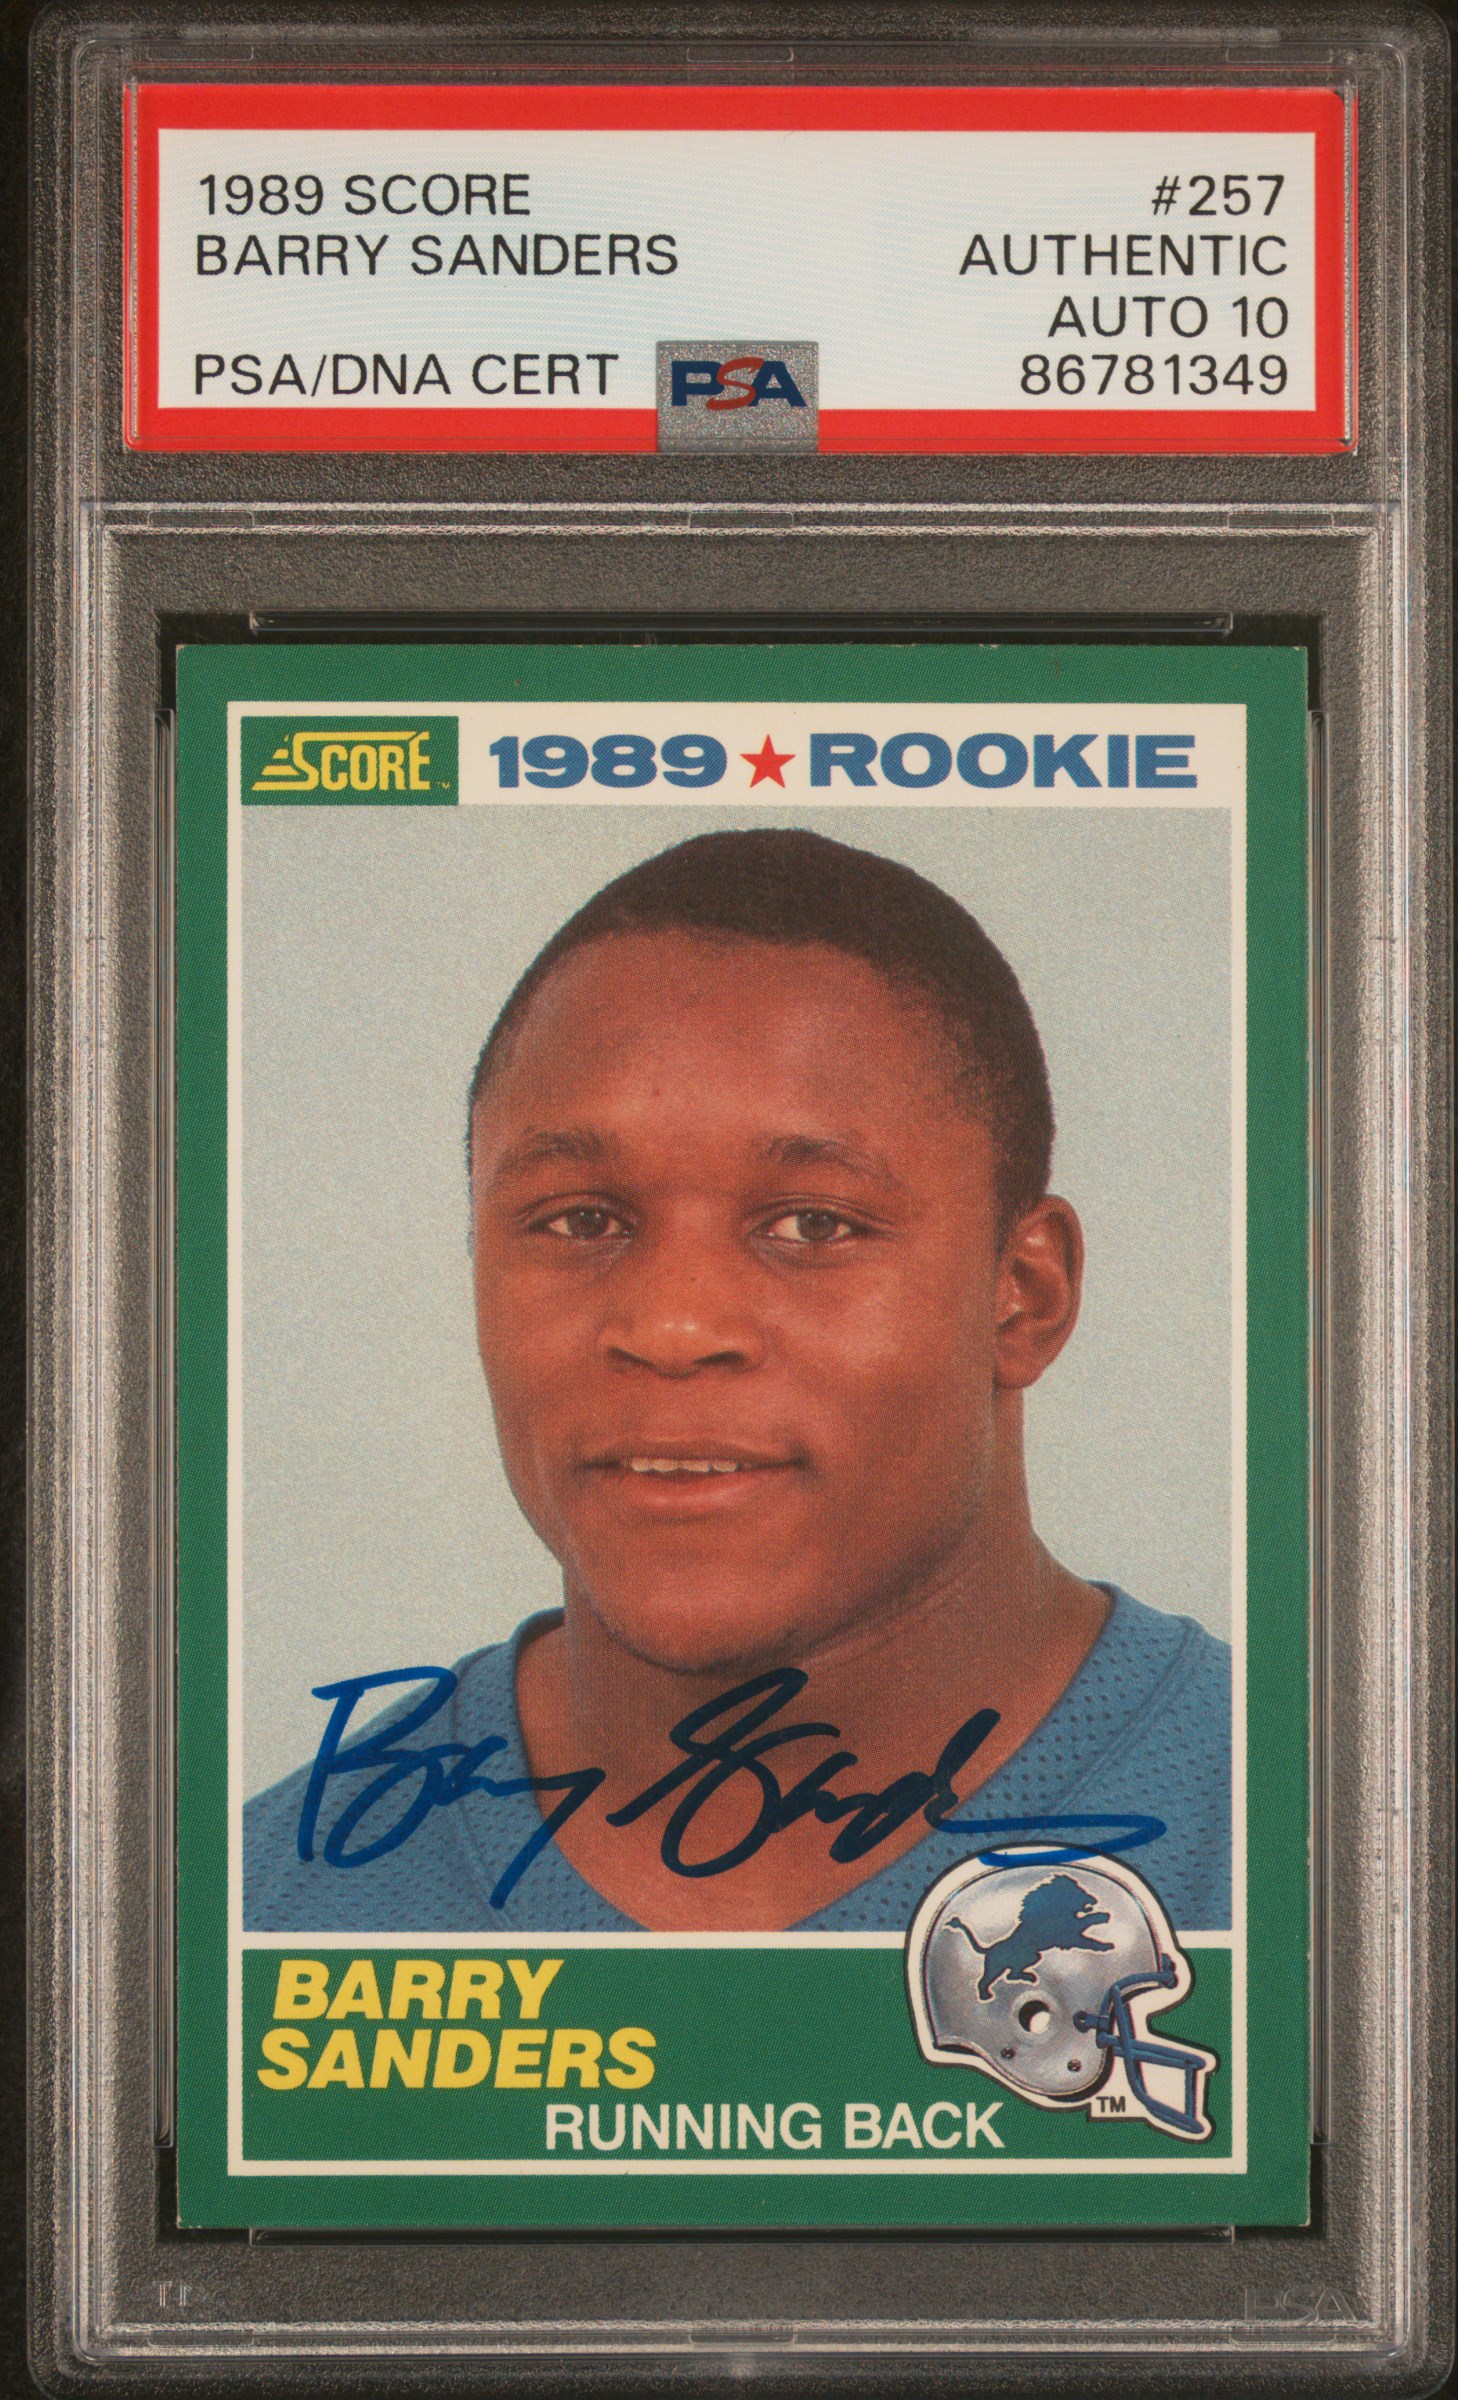 Barry Sanders 1989 Score Signed Football Rookie Card #257 Auto PSA 10 86781349